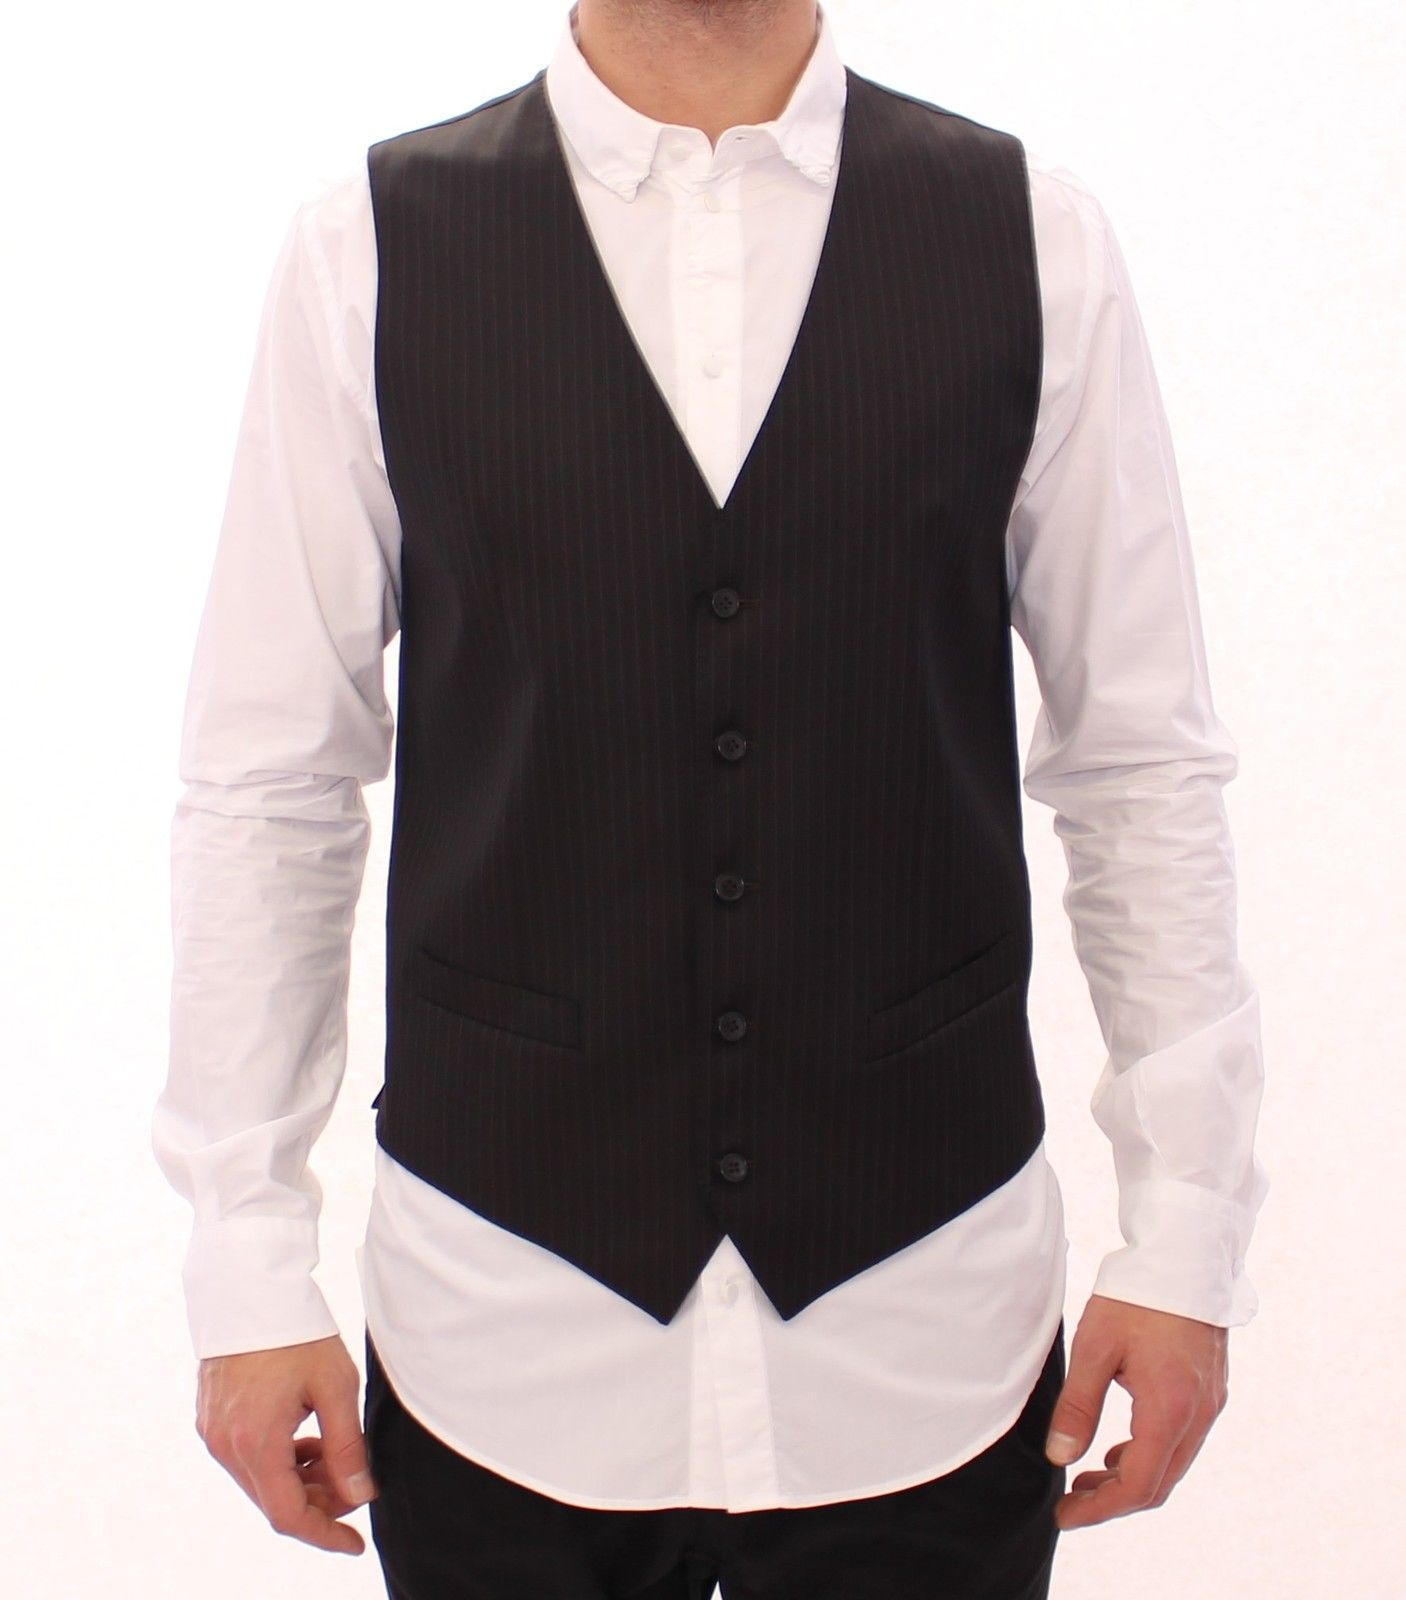 Elegant Black Striped Wool Dress Vest